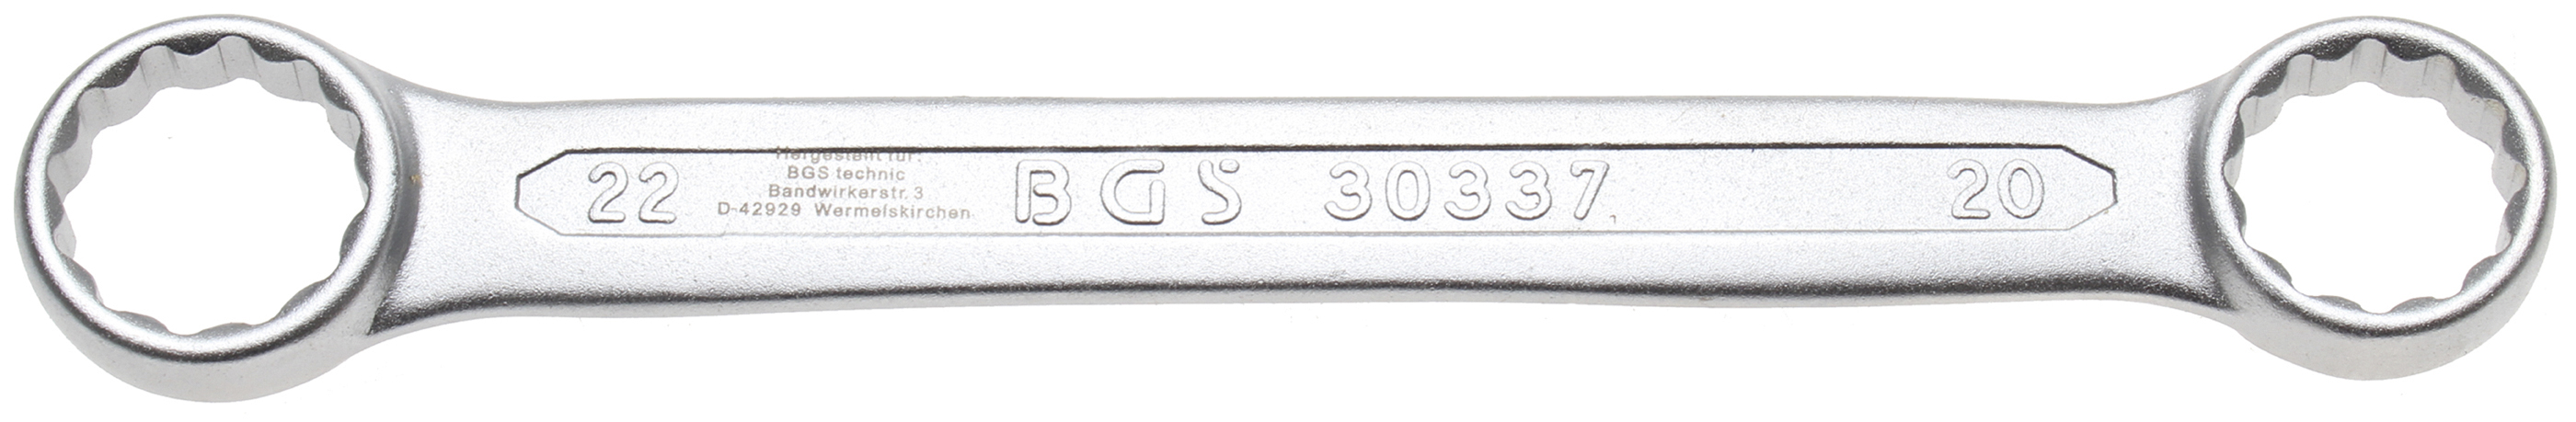 BGS 30337 Cheie inelara 20x22 mm